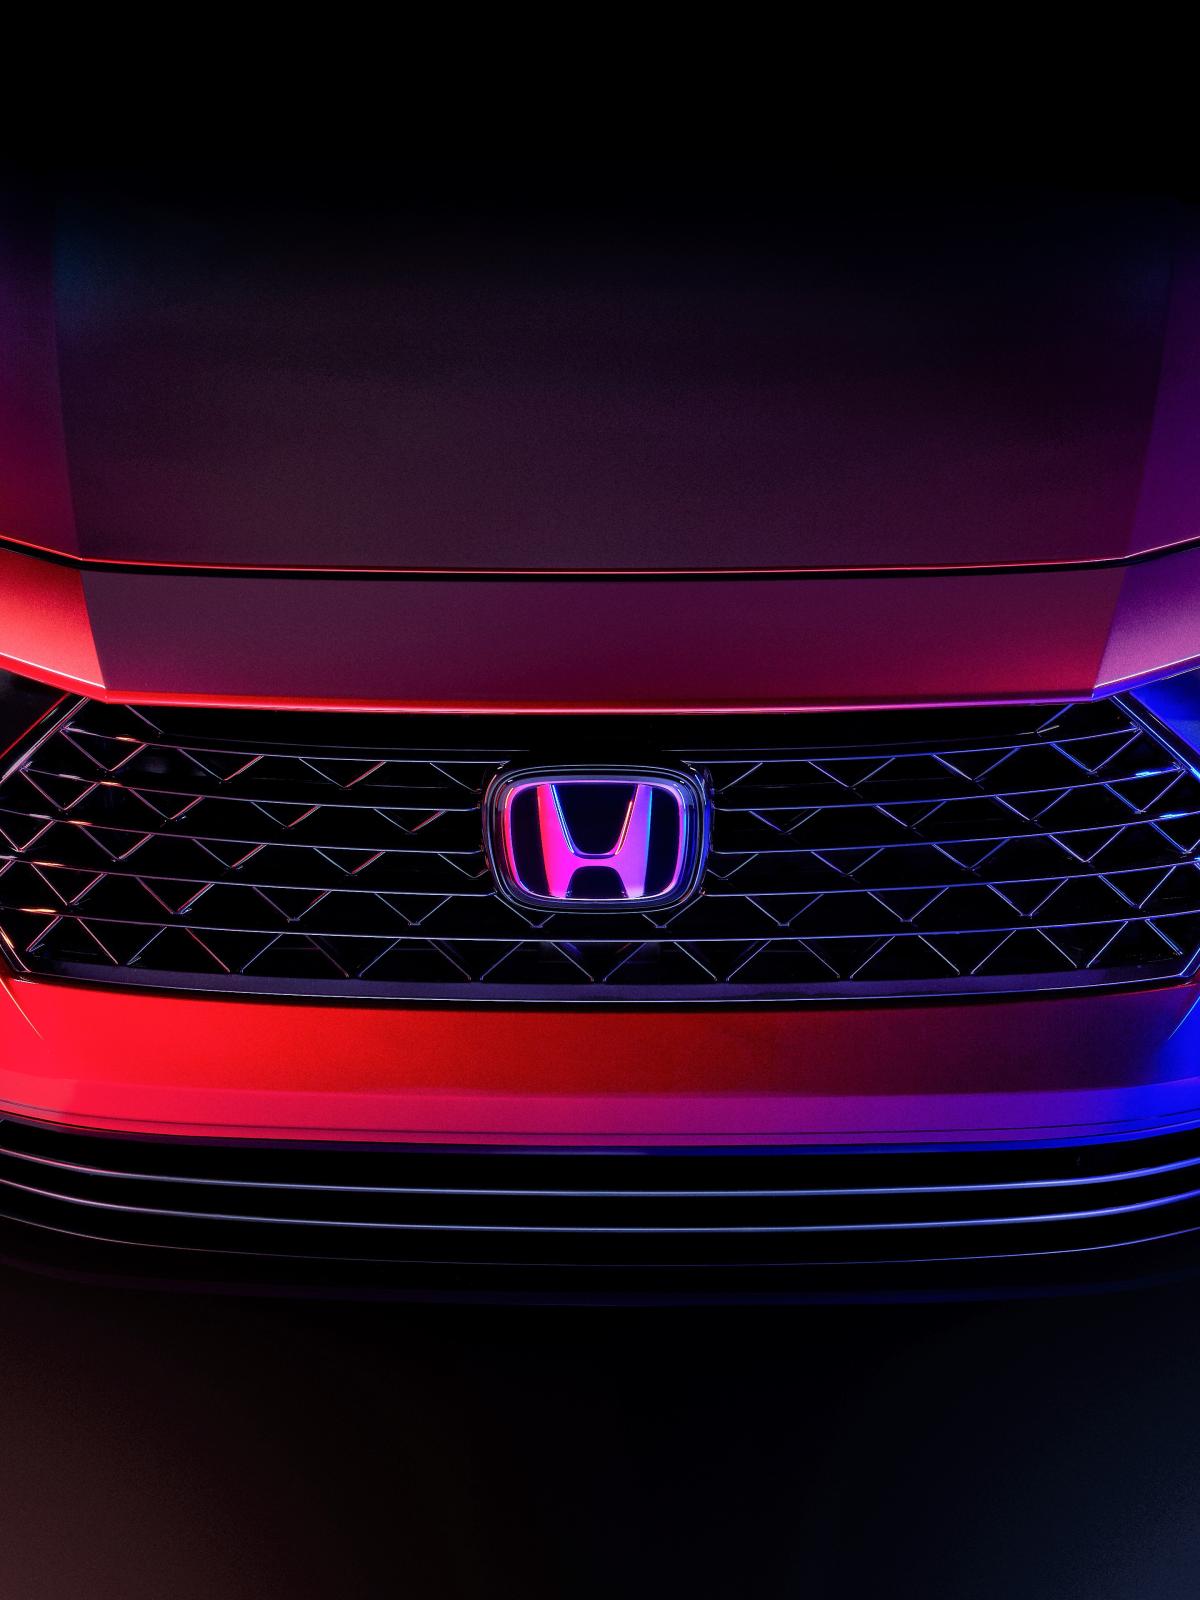 2023 Honda Accord teased ahead of launch